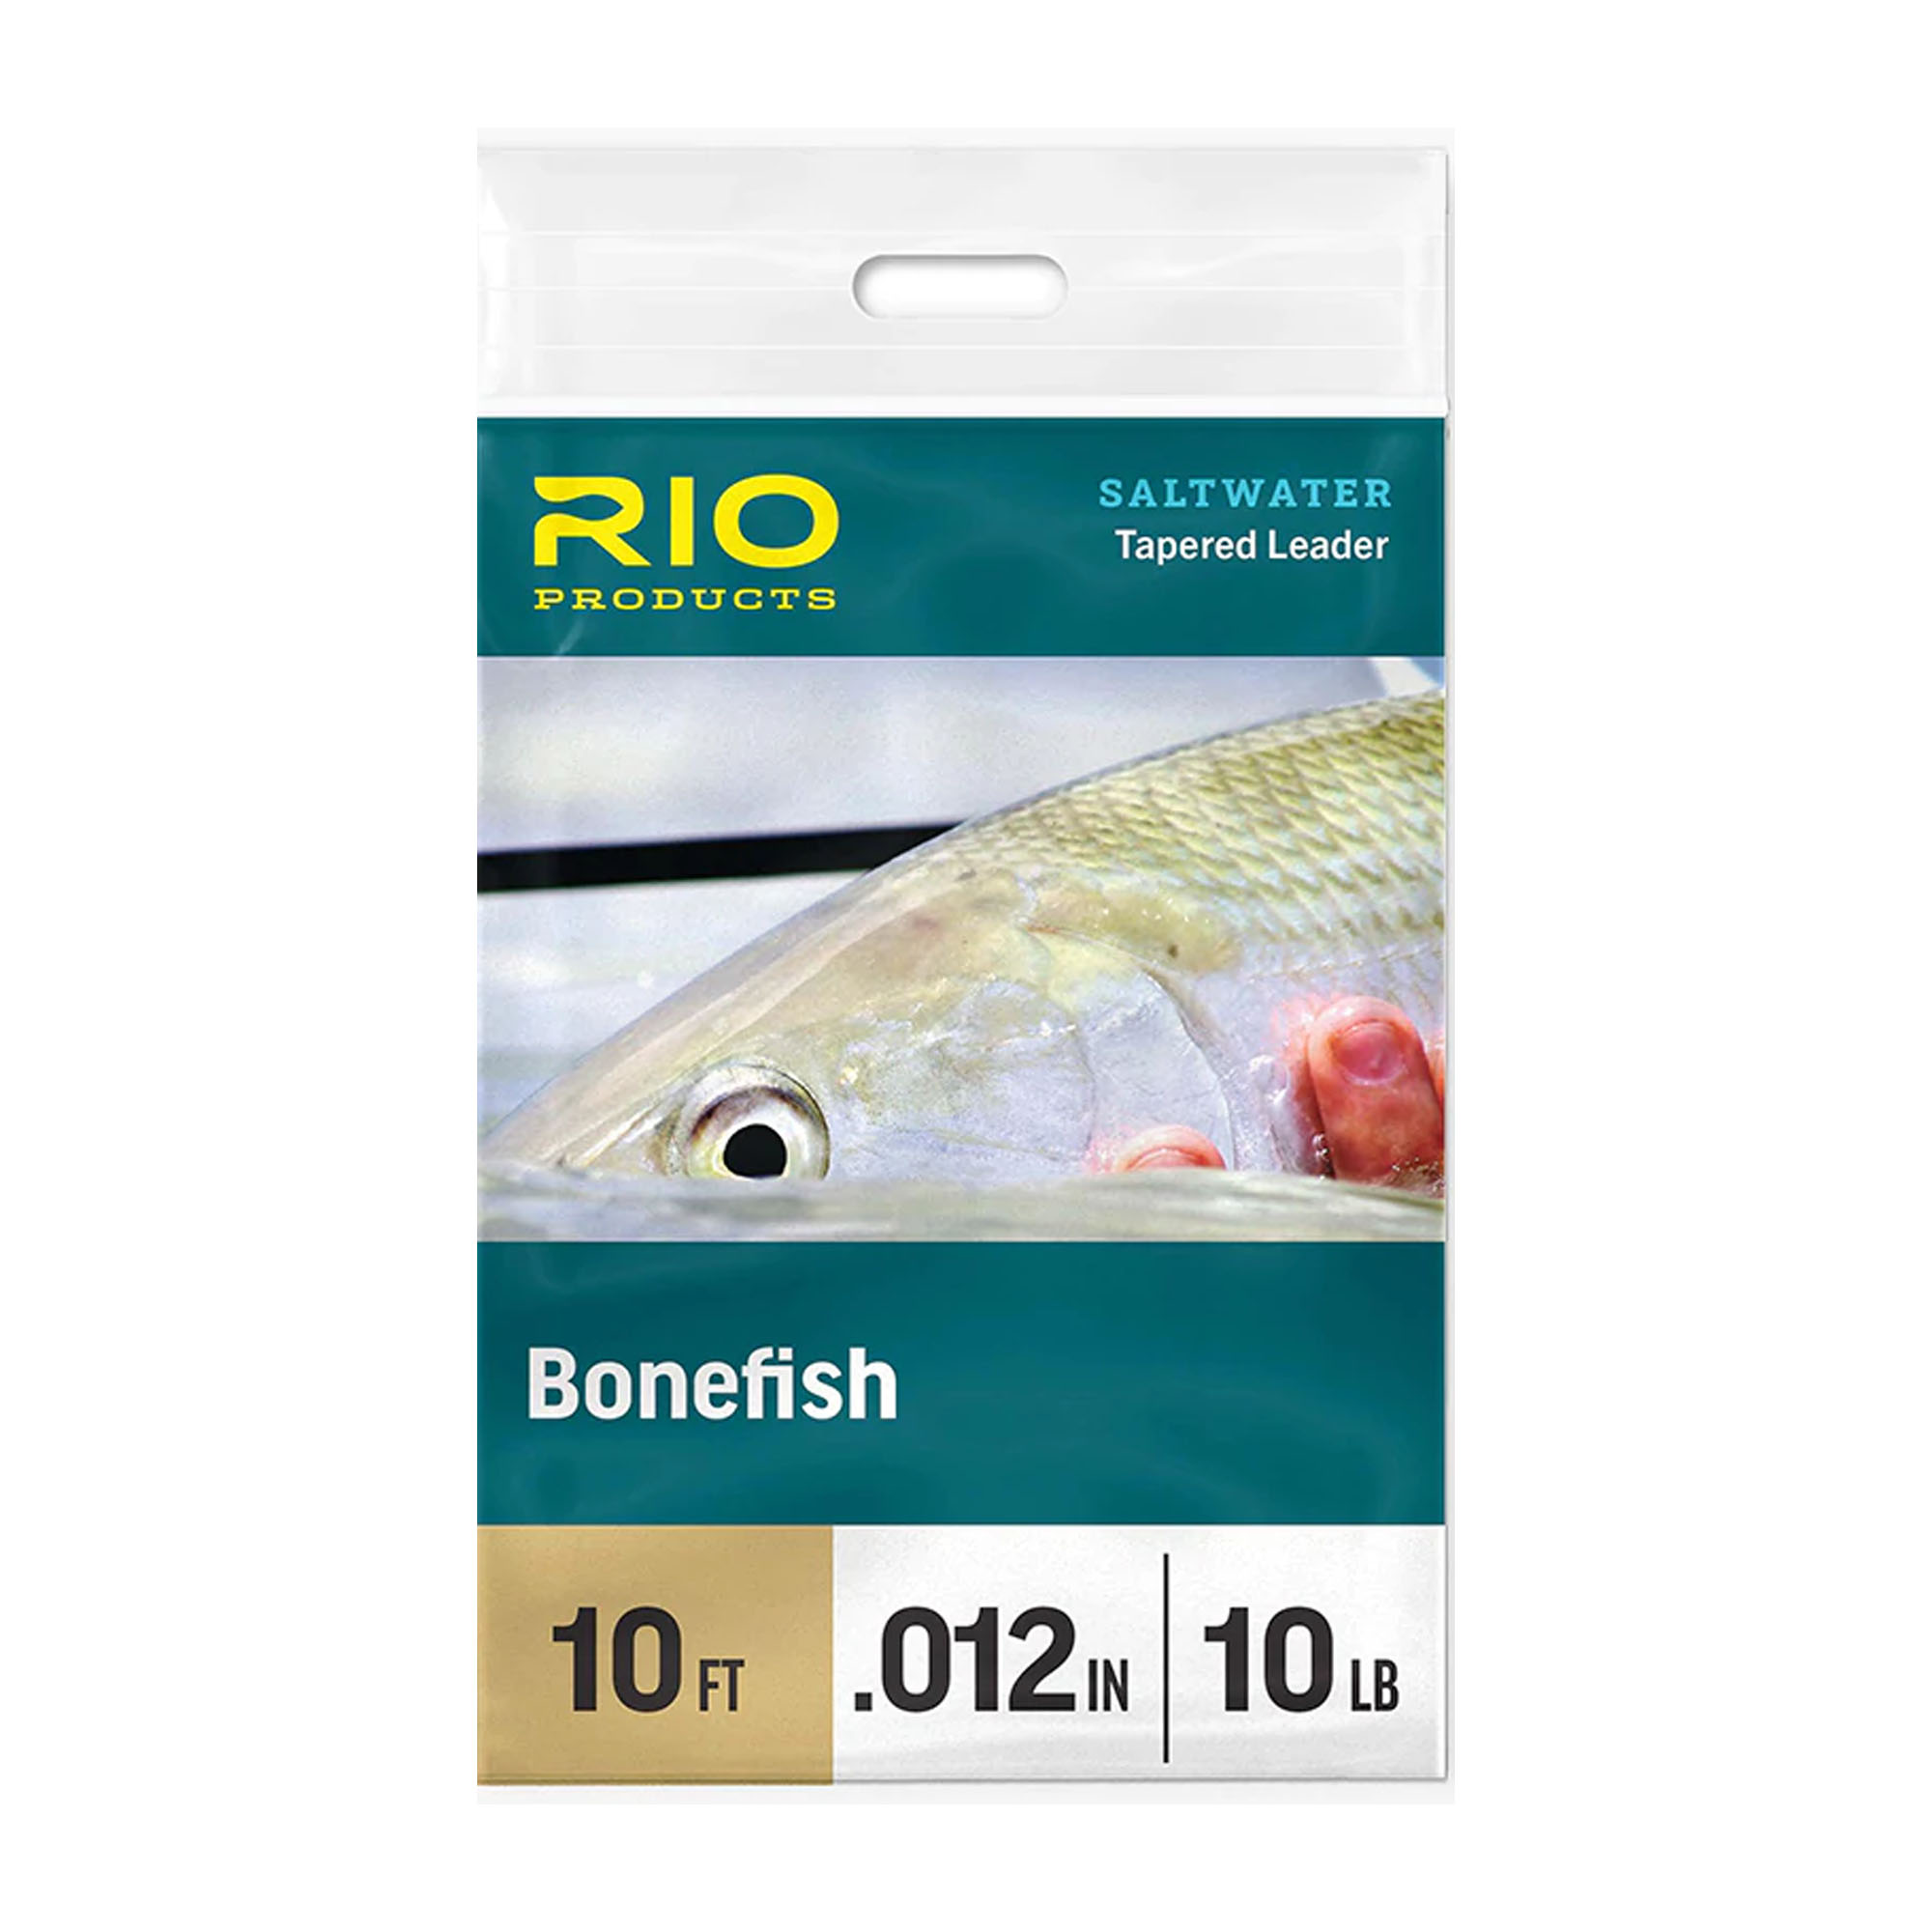 RIO Bonefish (10′) Leader – Guide Flyfishing, Fly Fishing Rods, Reels, Sage, Redington, RIO